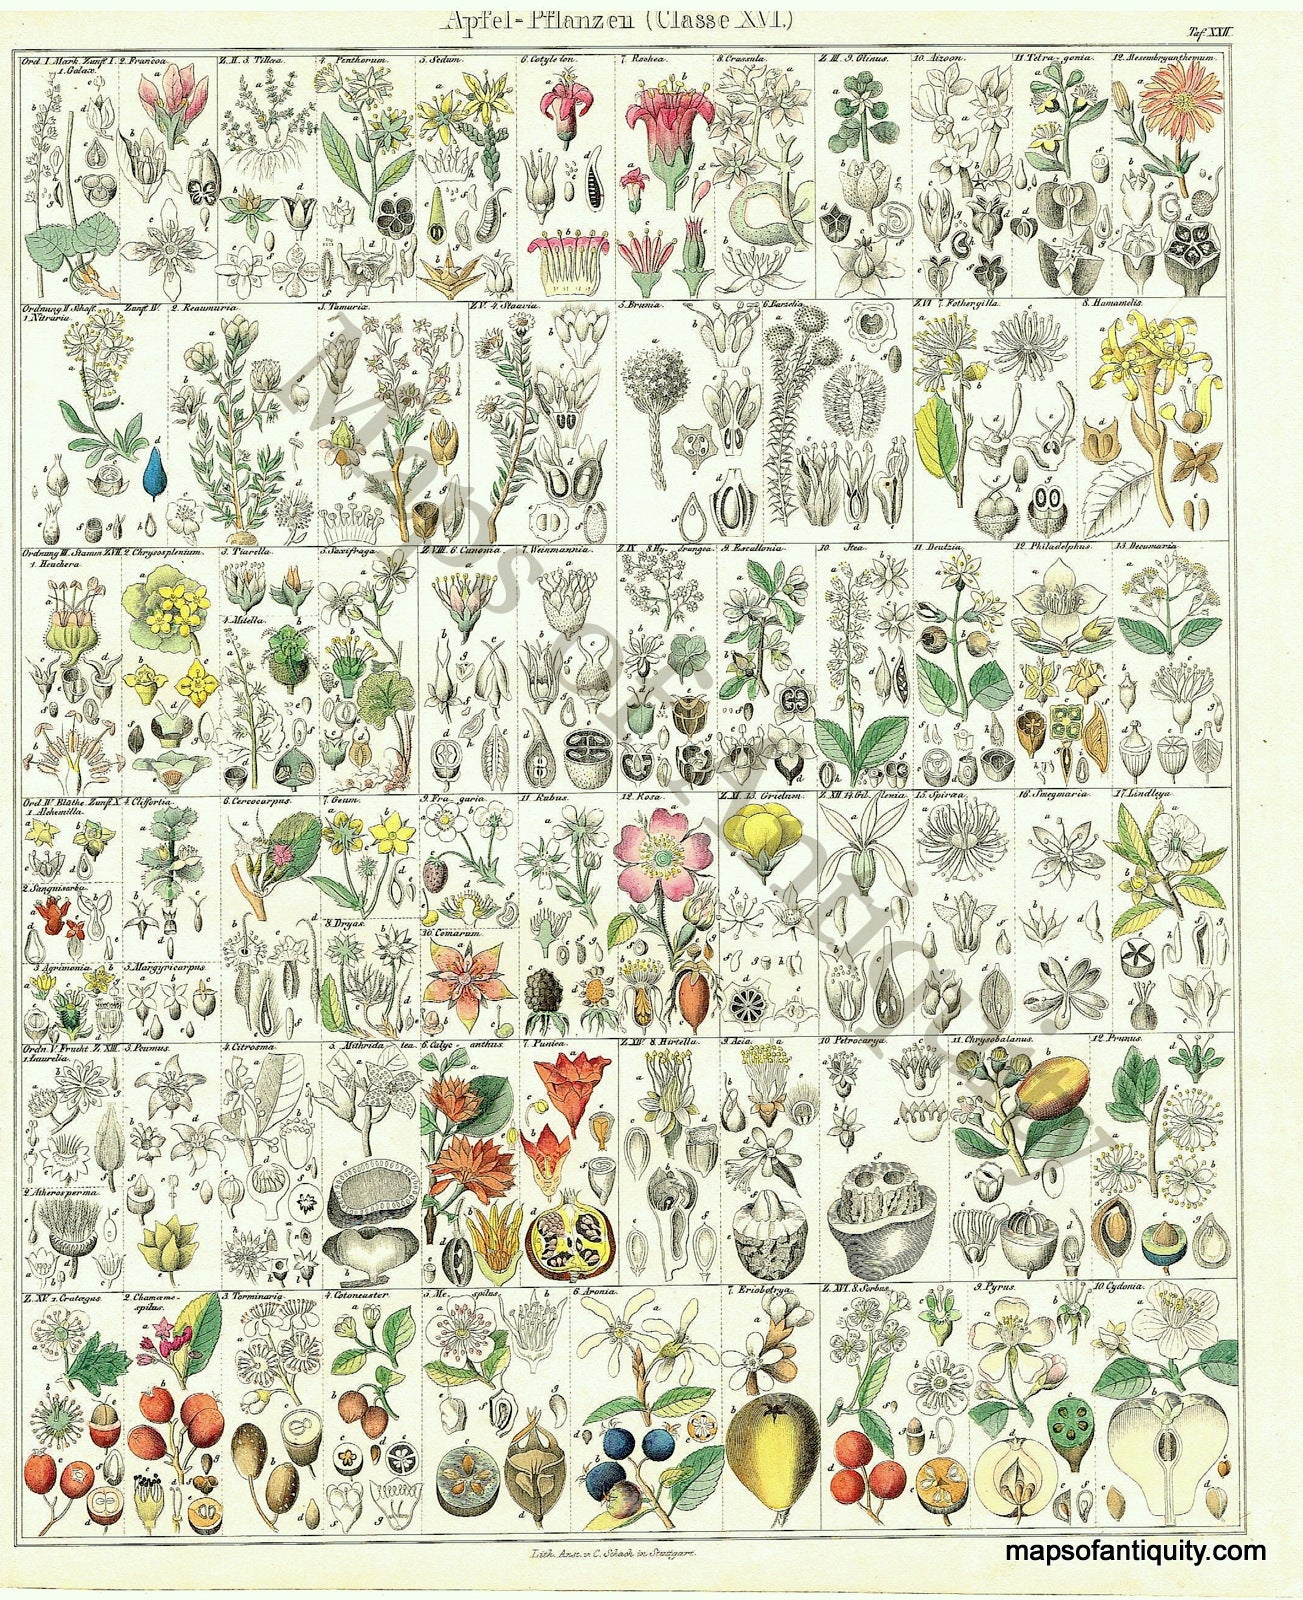 Hand-Colored-Antique-Illustration-Apfel-Pflanzen-Apple-Plants-Oken-Natural-History-Prints-Botancial-1843-Oken-Maps-Of-Antiquity